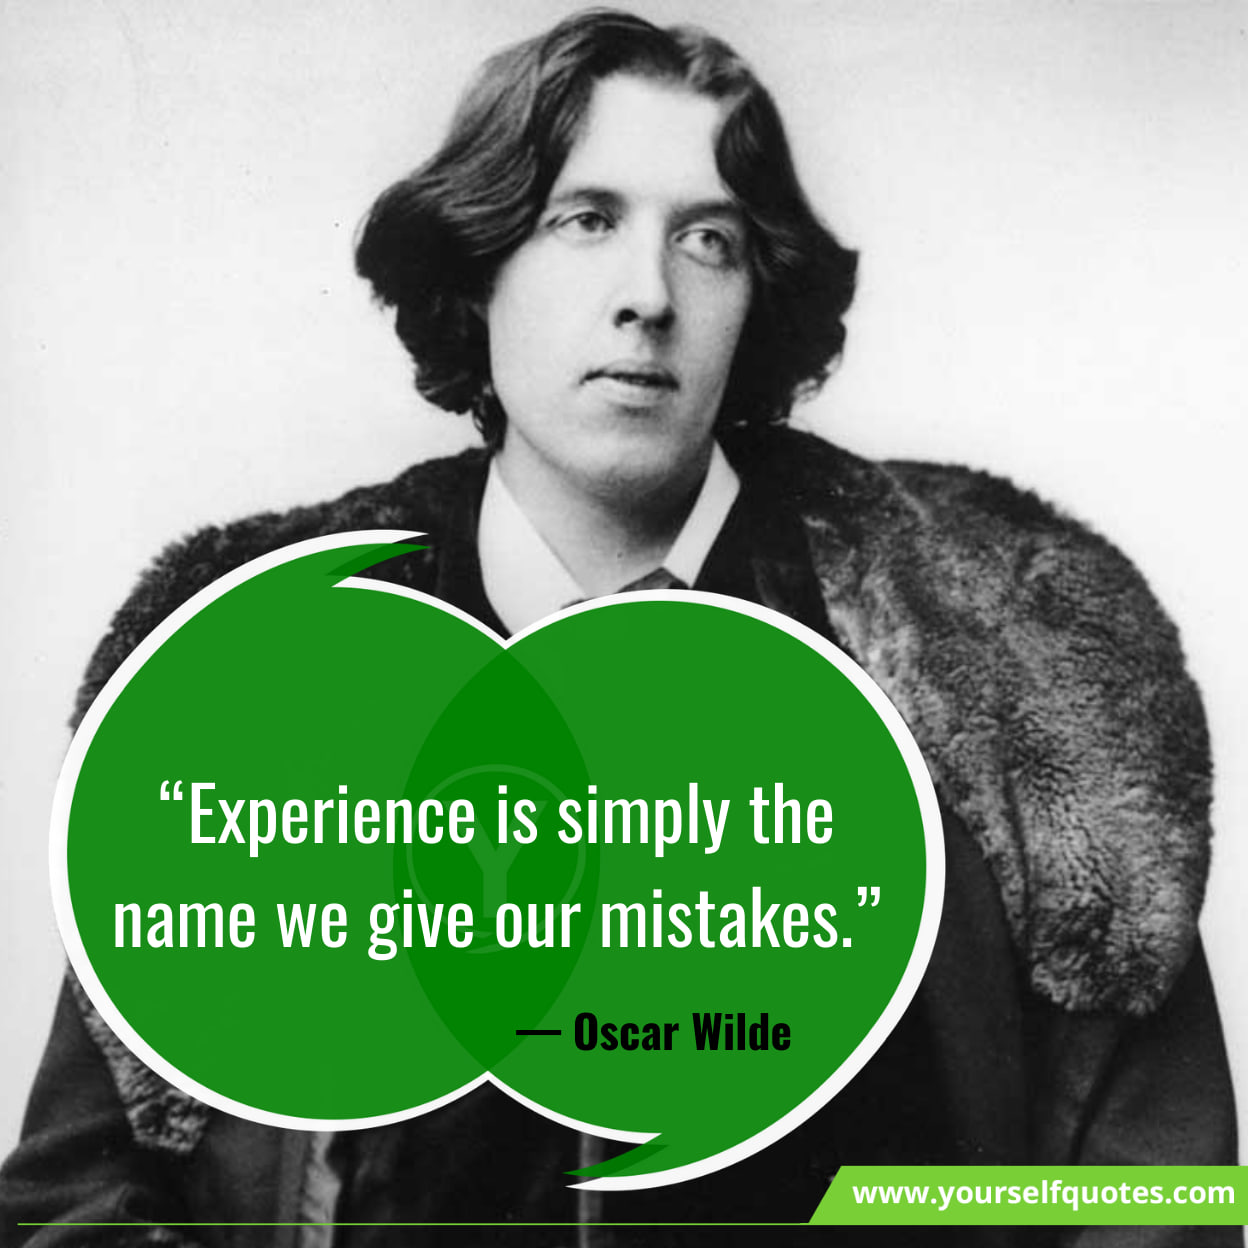 Oscar Wilde Love Quotes